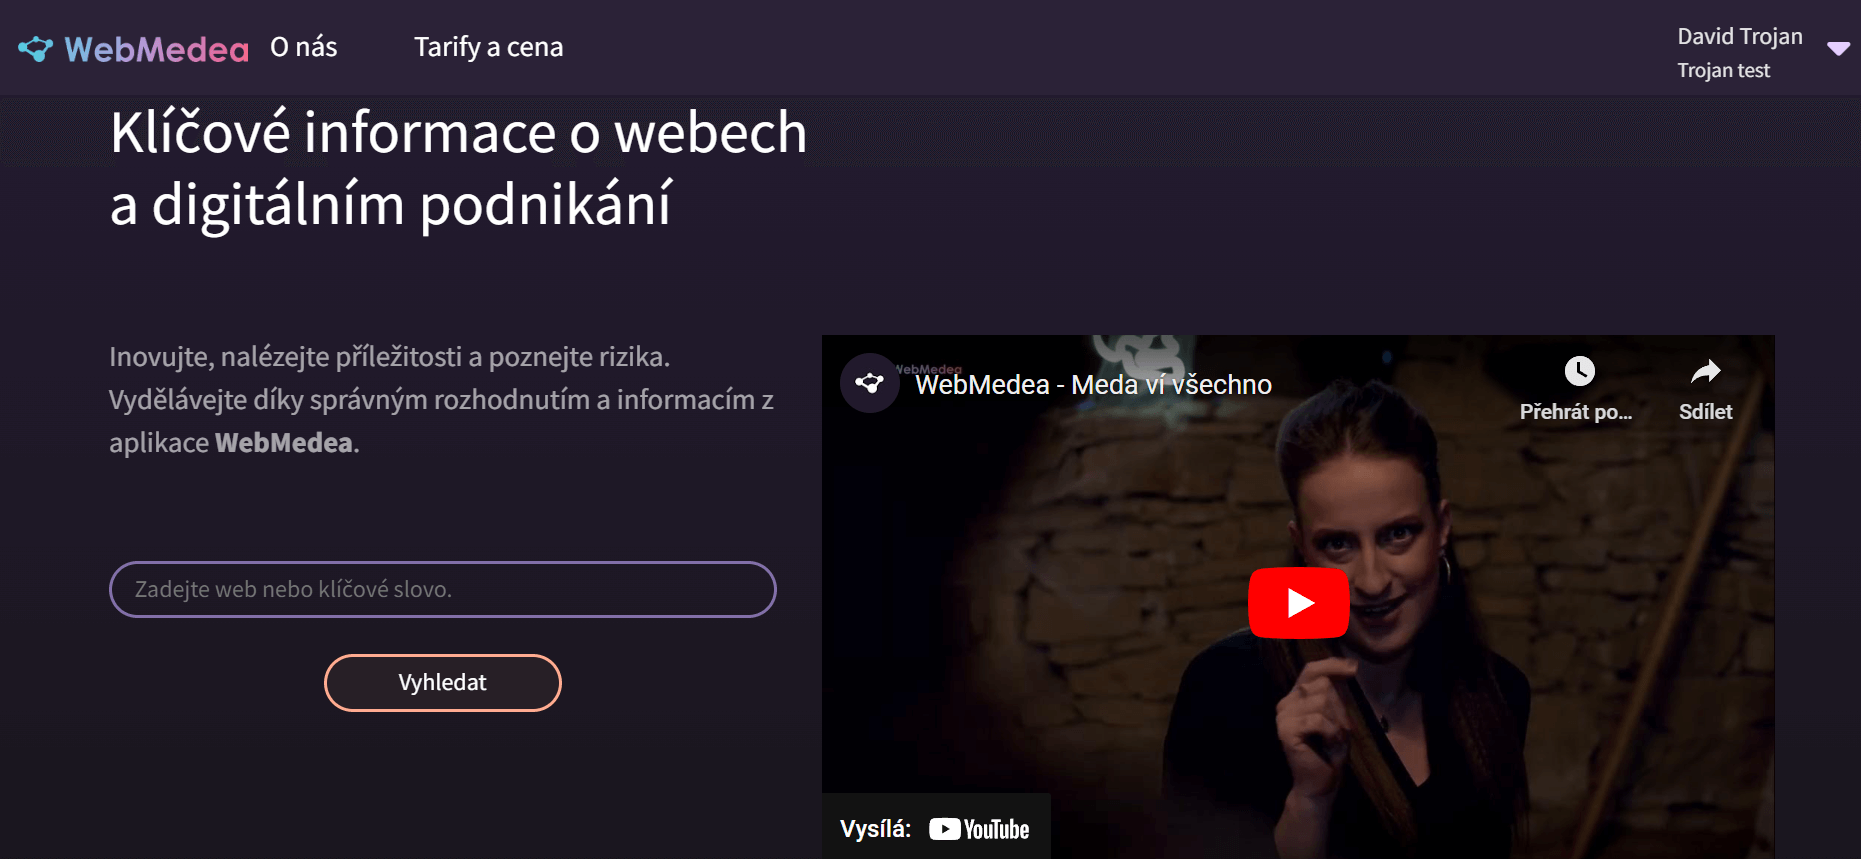 Homepage of the application WebMedea